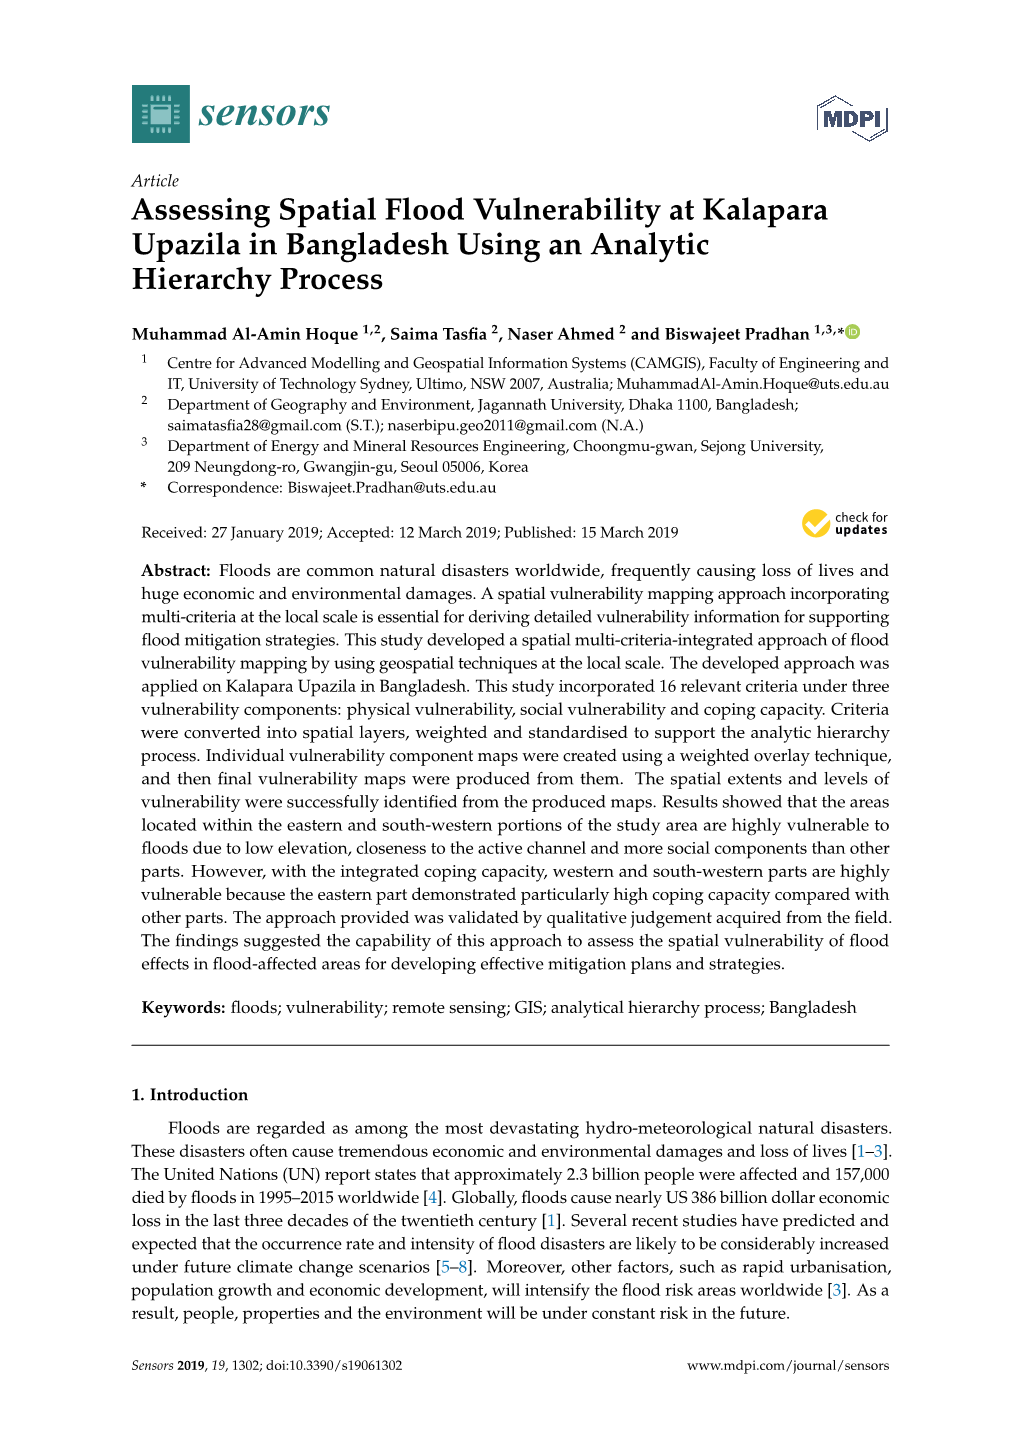 Assessing Spatial Flood Vulnerability at Kalapara Upazila in Bangladesh Using an Analytic Hierarchy Process